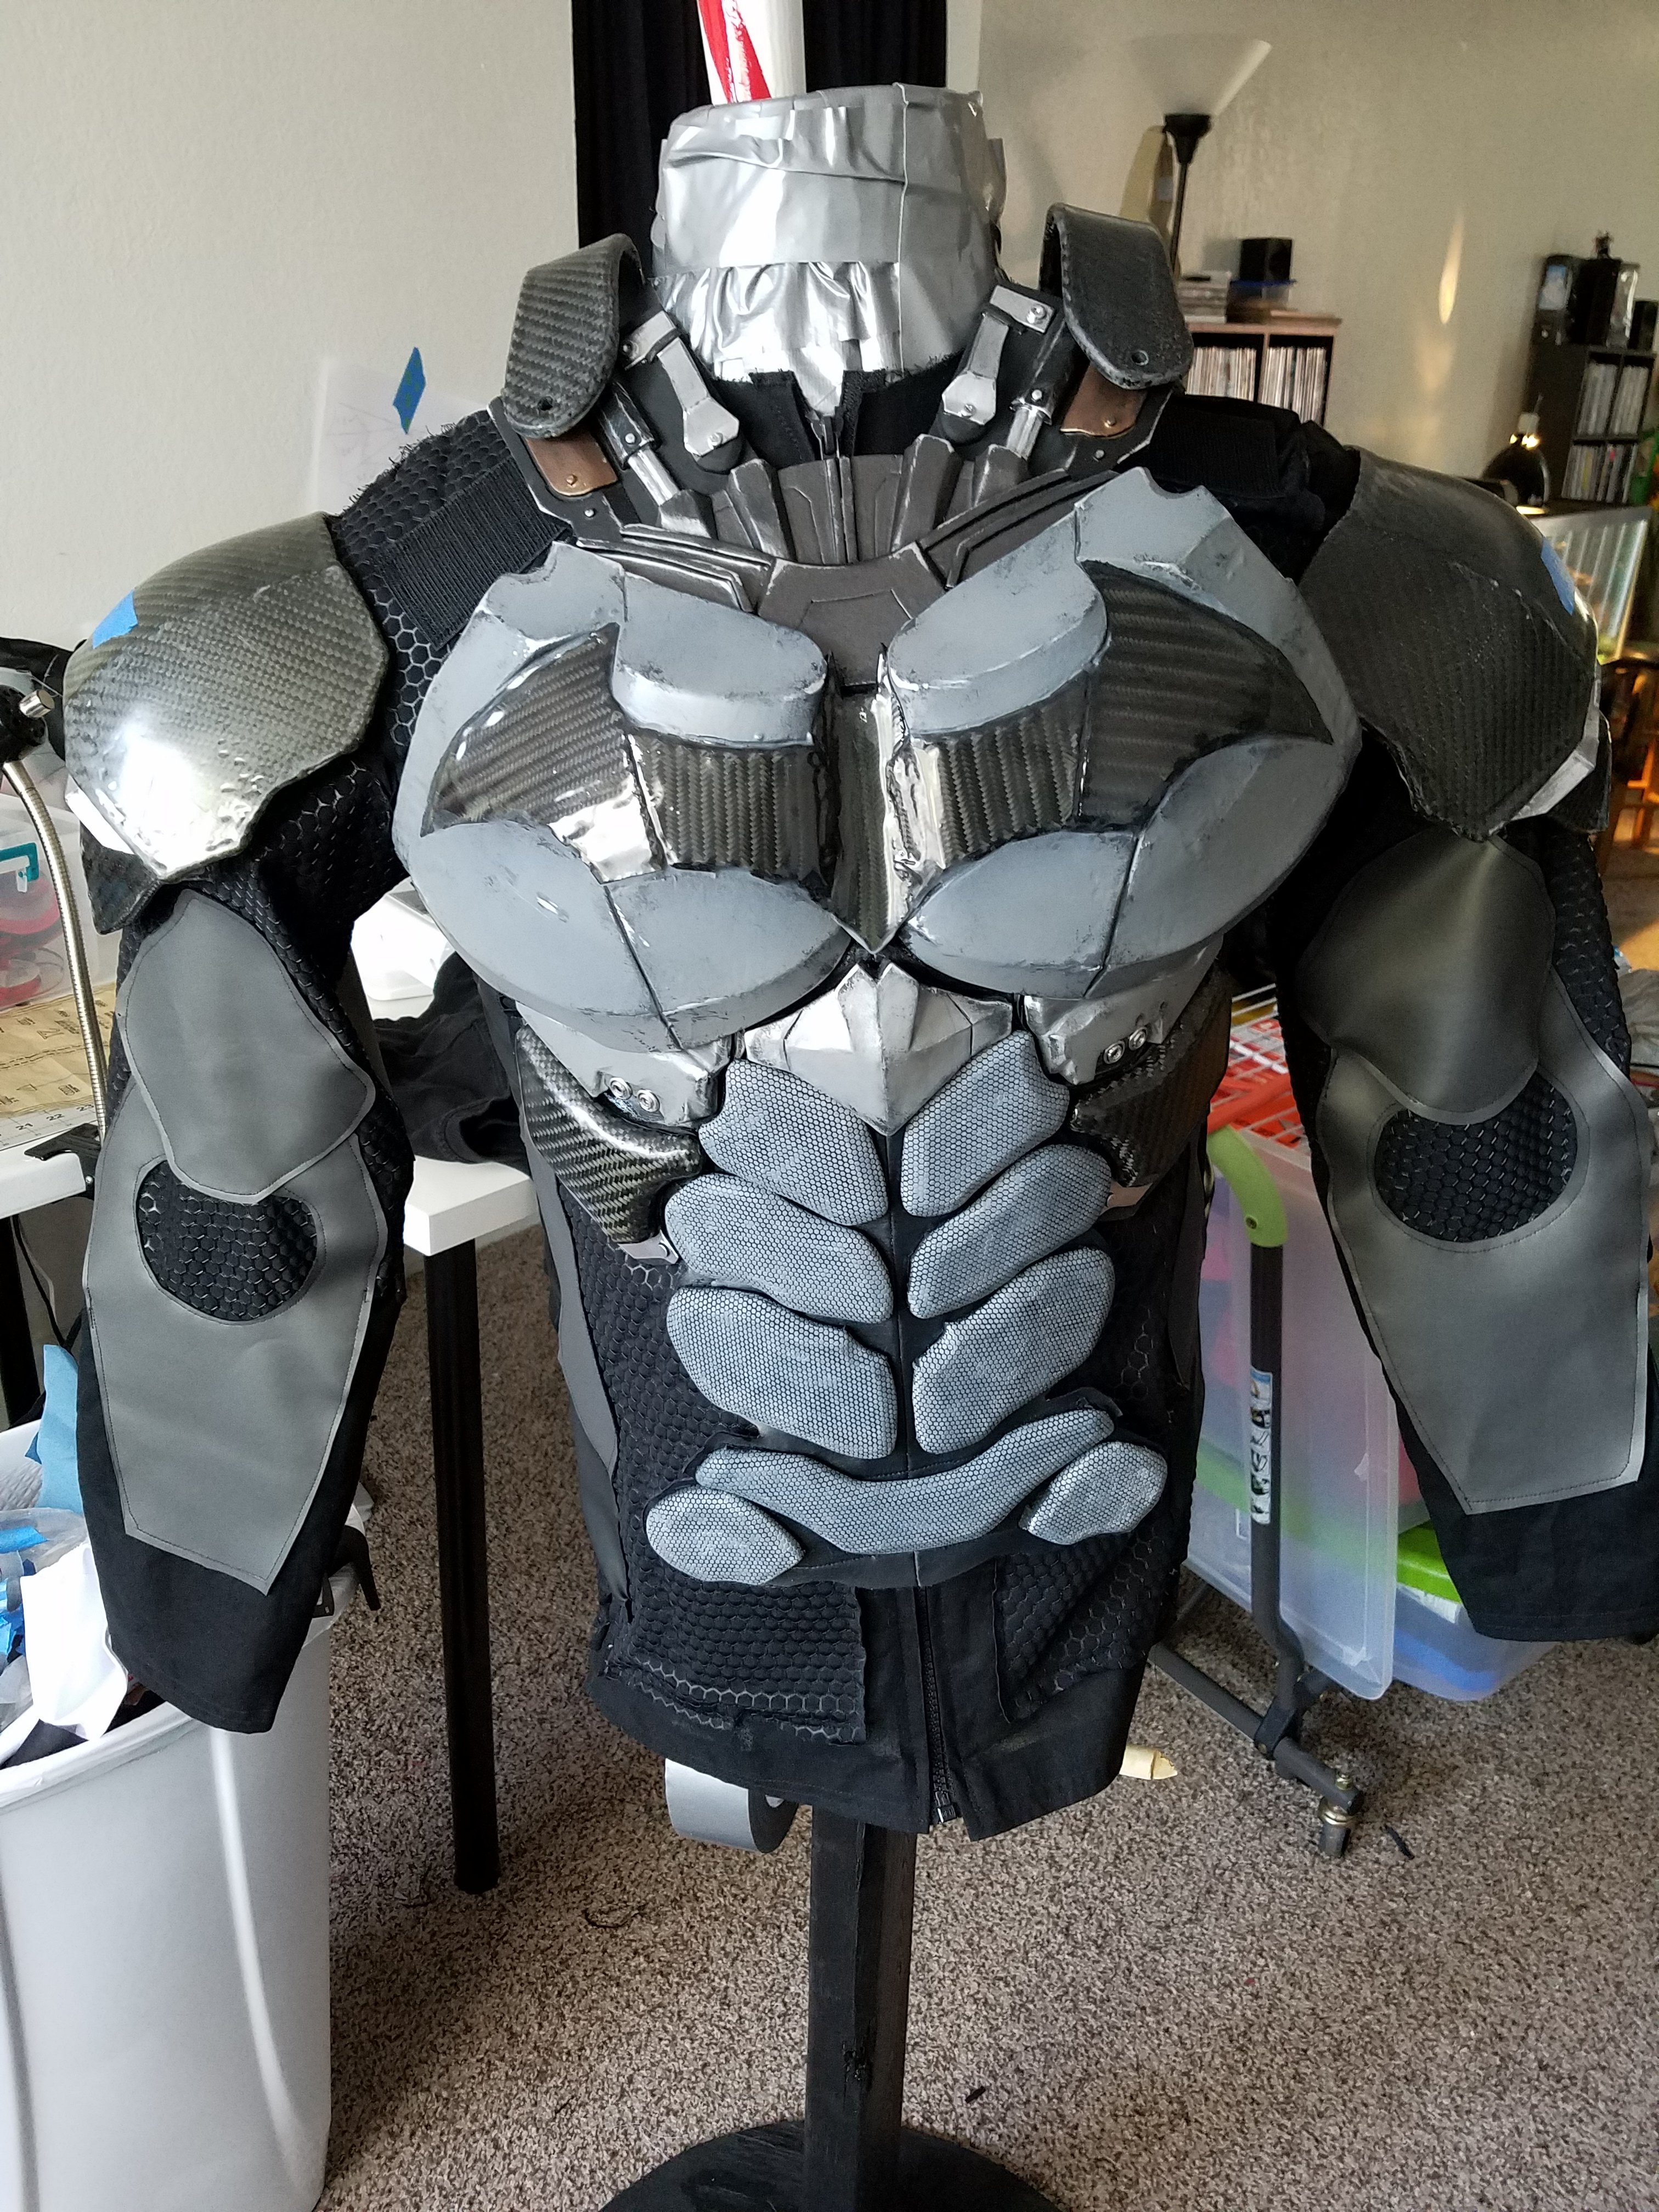 batman arkham knight arkham knight armor